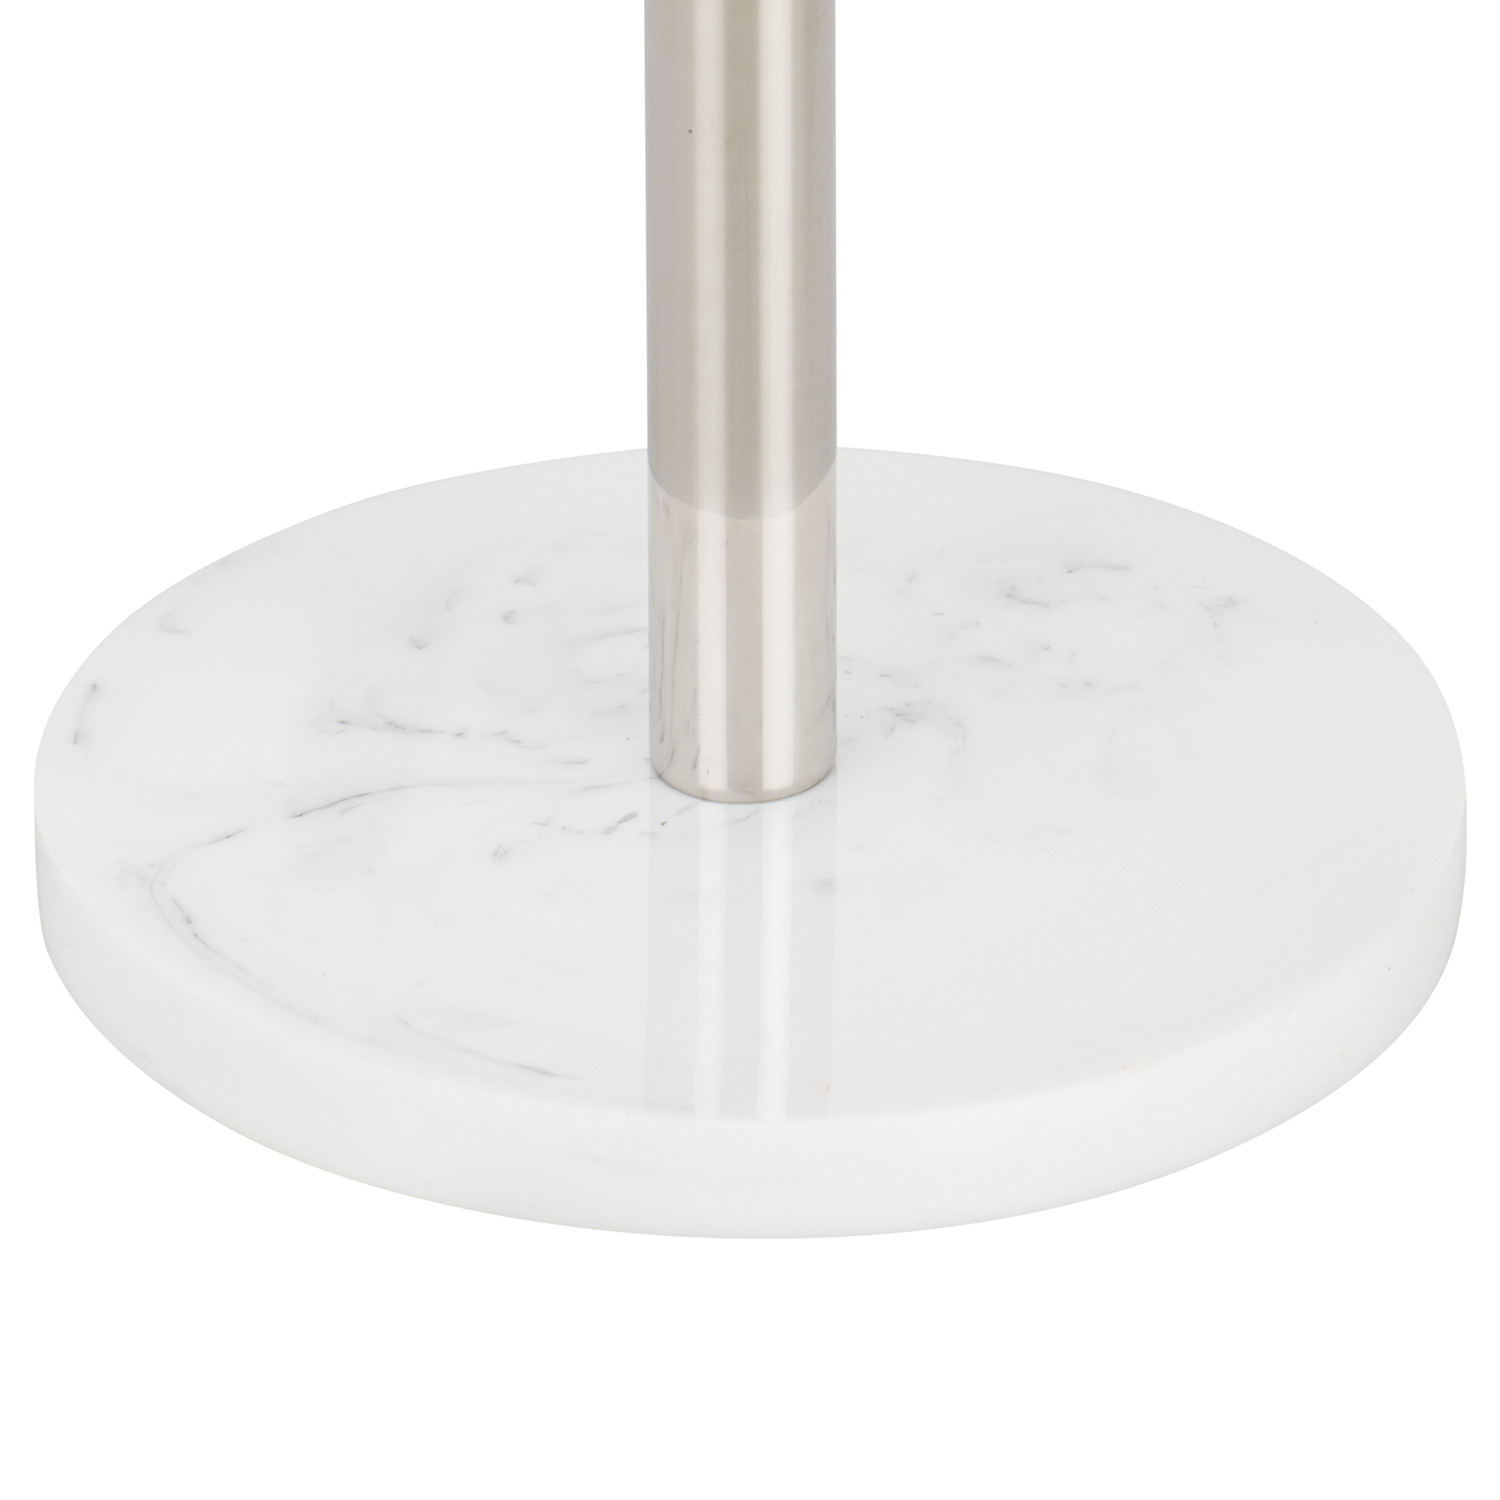 Attica White Marble Effect Toilet Roll Holder Image 2